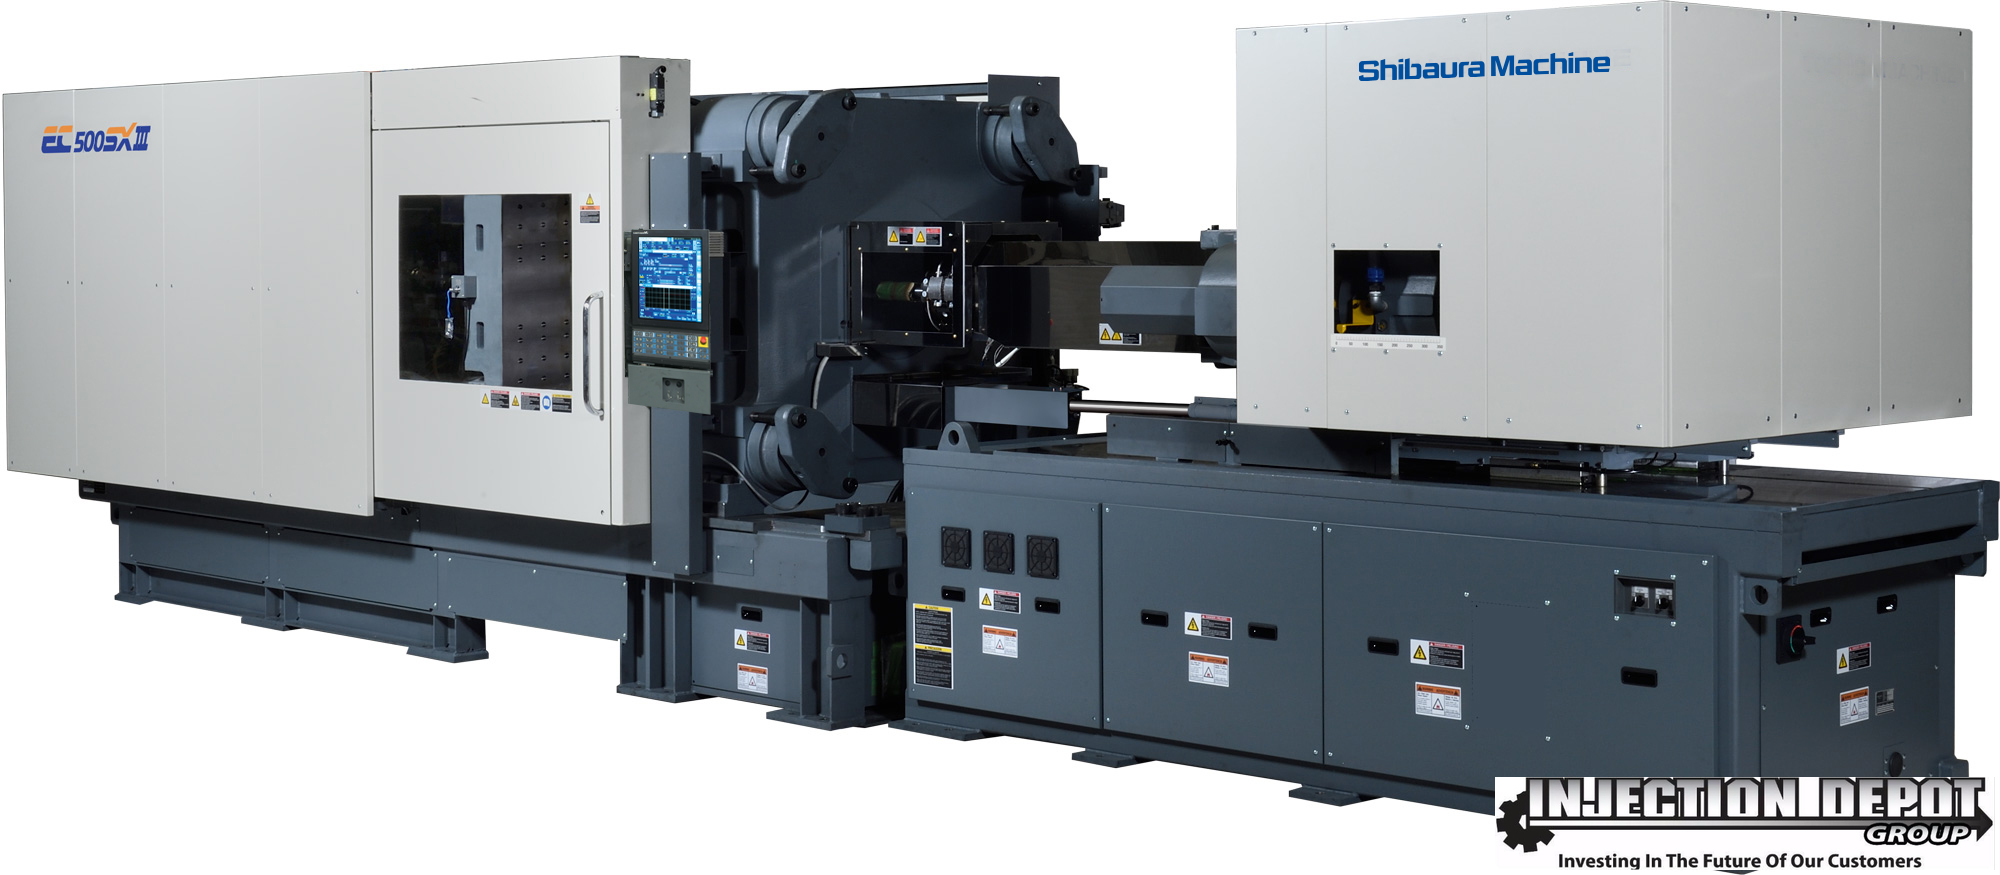 SHIBAURA MACHINE EC500SXIIIV70-i26 B Horizontal Injection Moulding Machines | INJECTION DEPOT GROUP